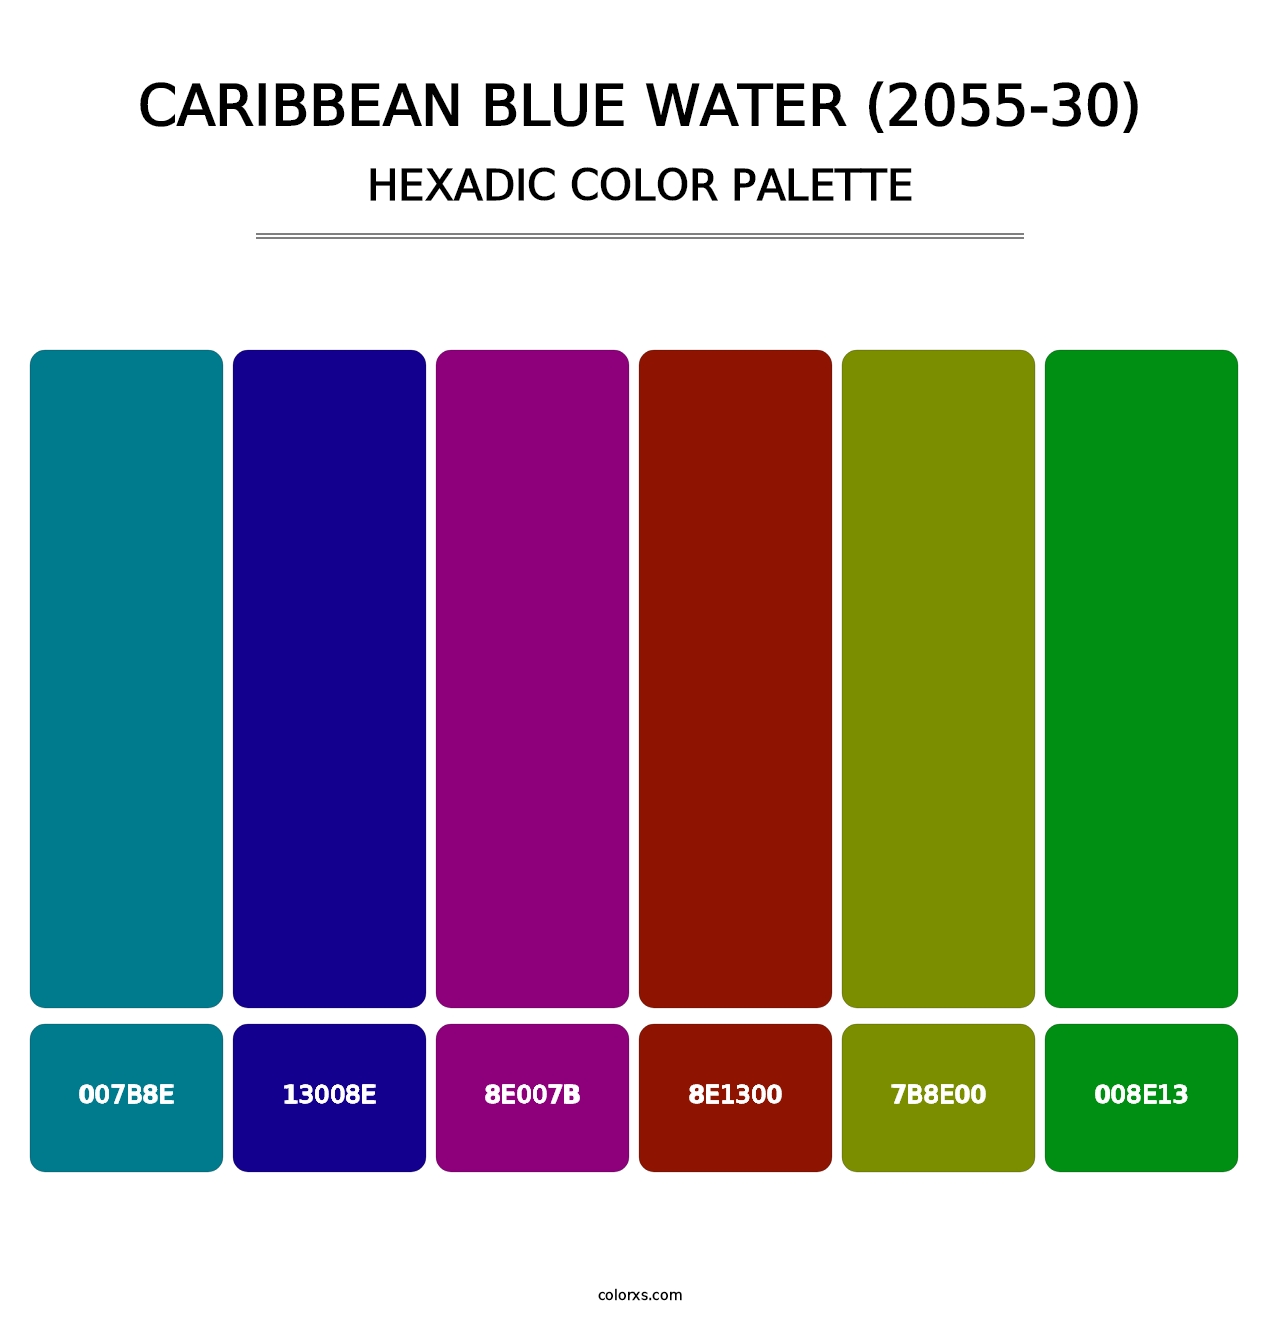 Caribbean Blue Water (2055-30) - Hexadic Color Palette